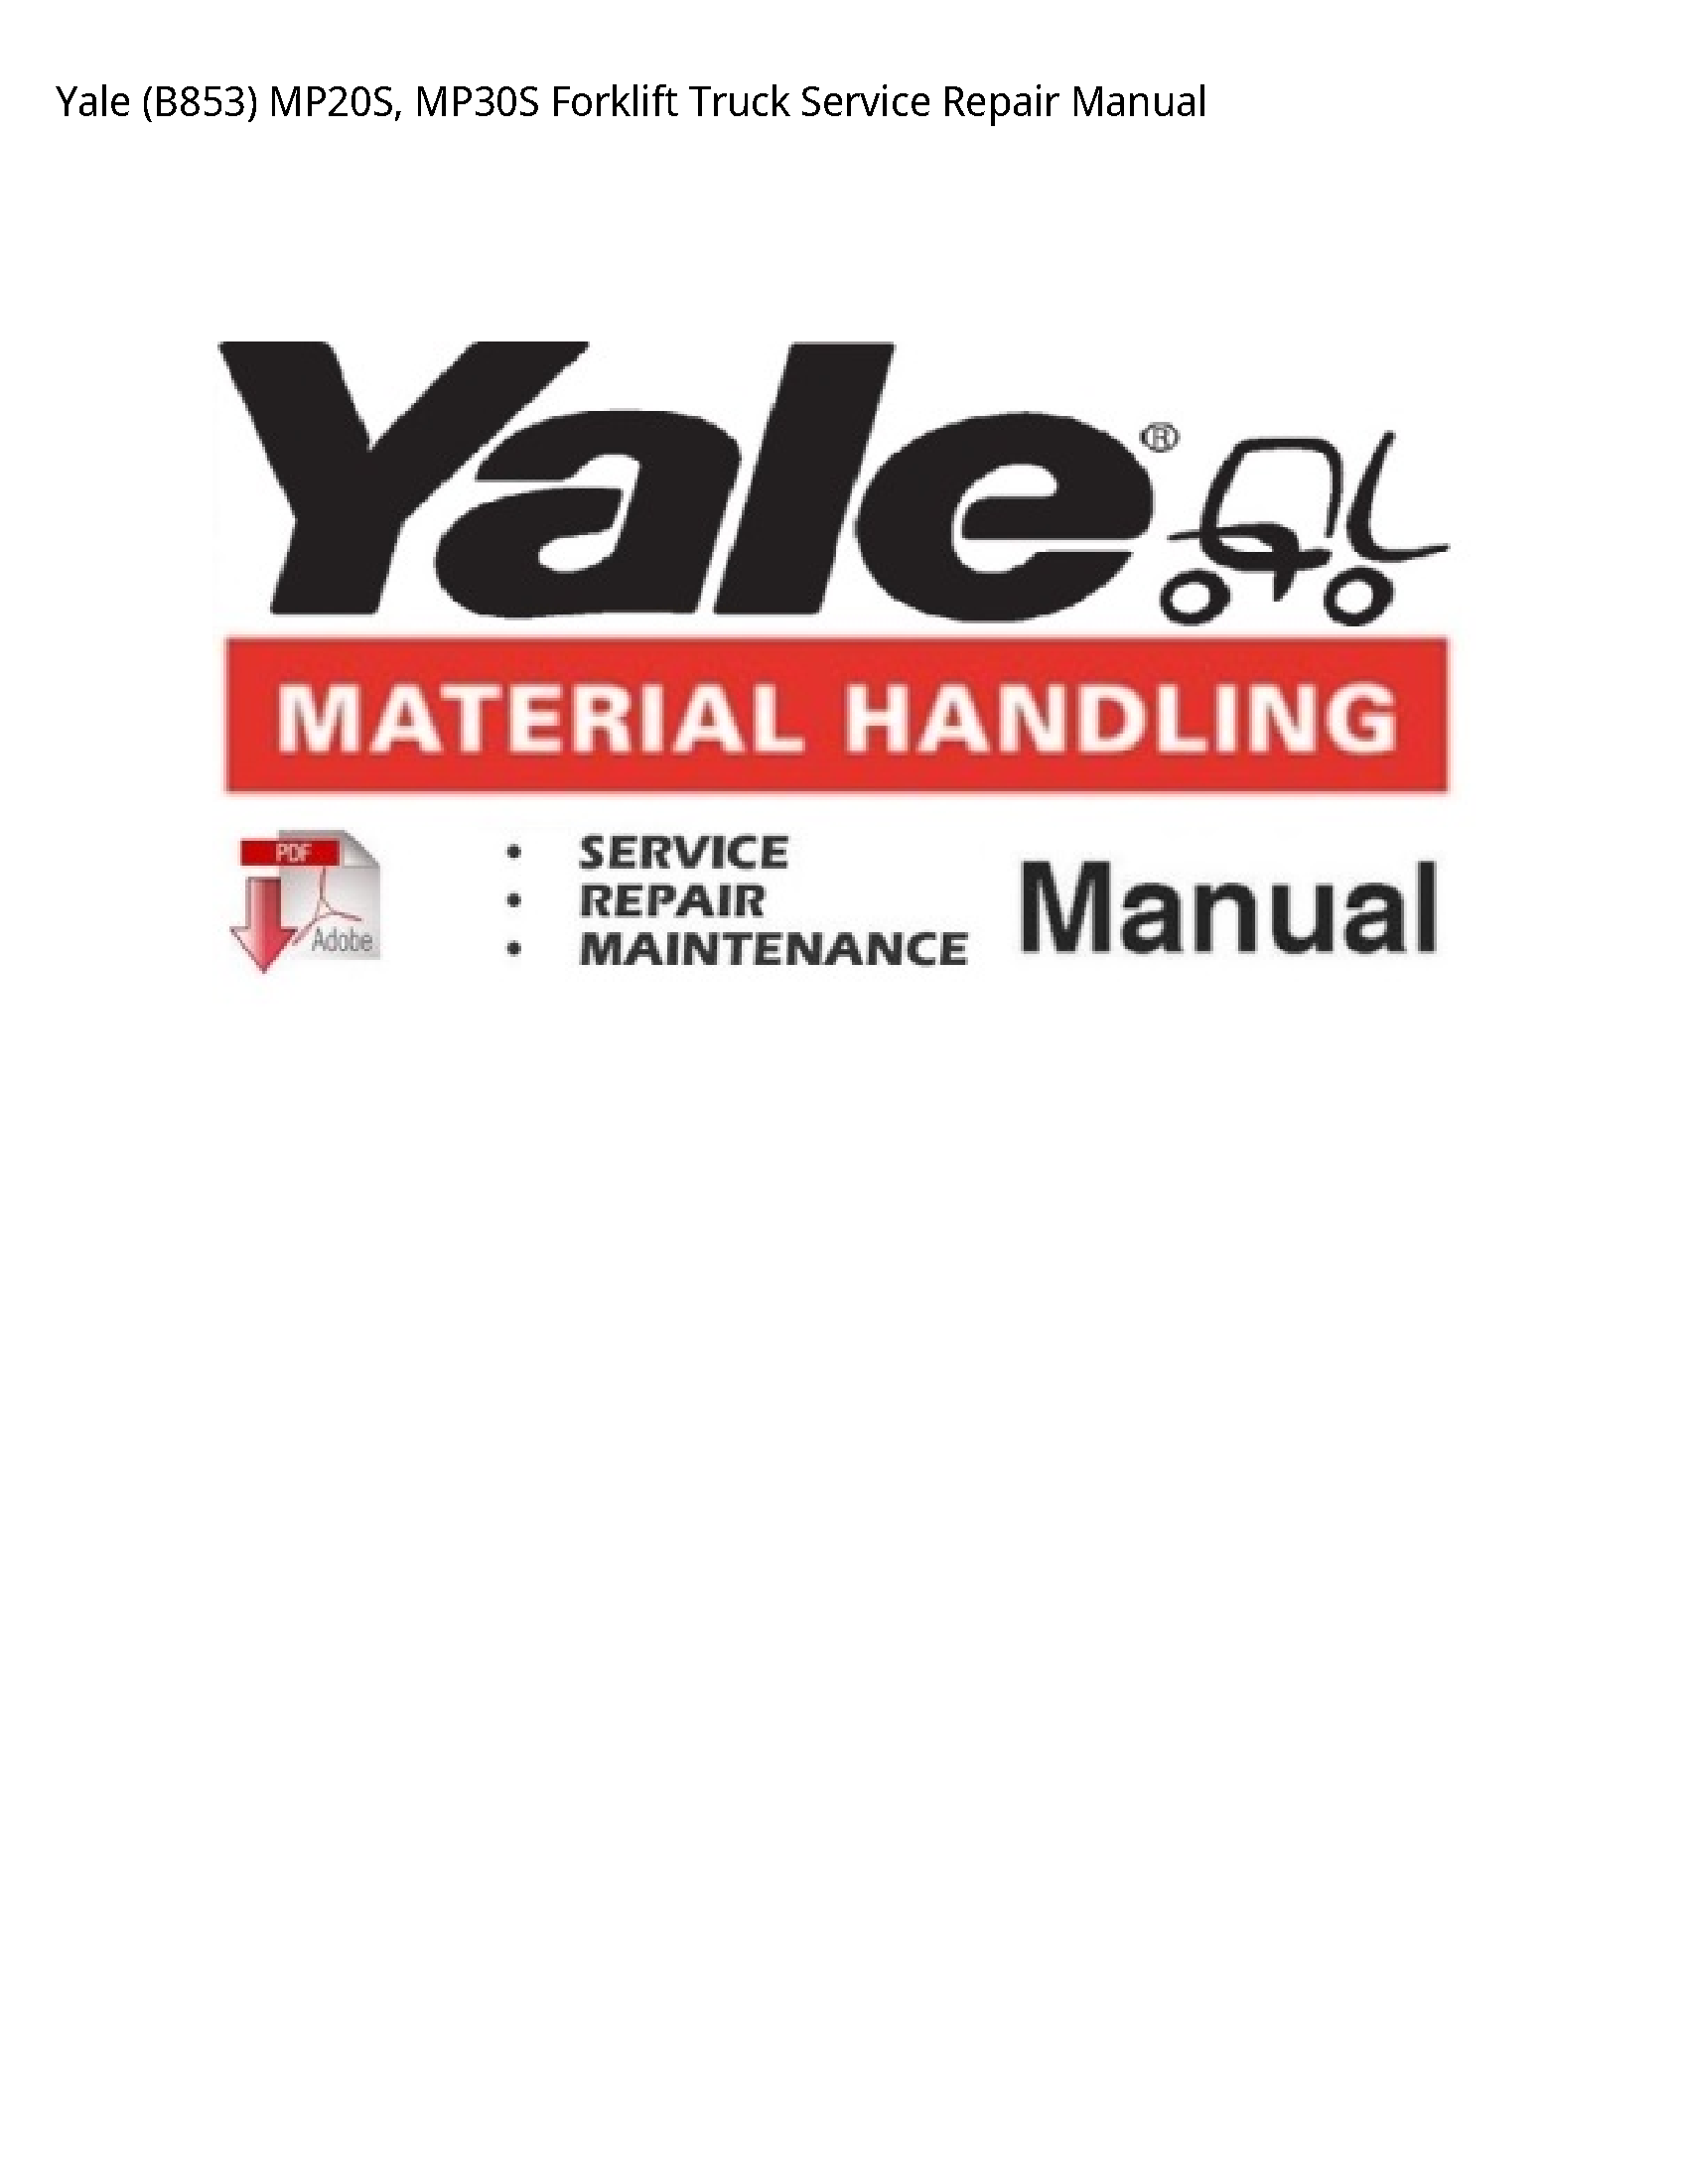 Yale (B853) Forklift Truck manual